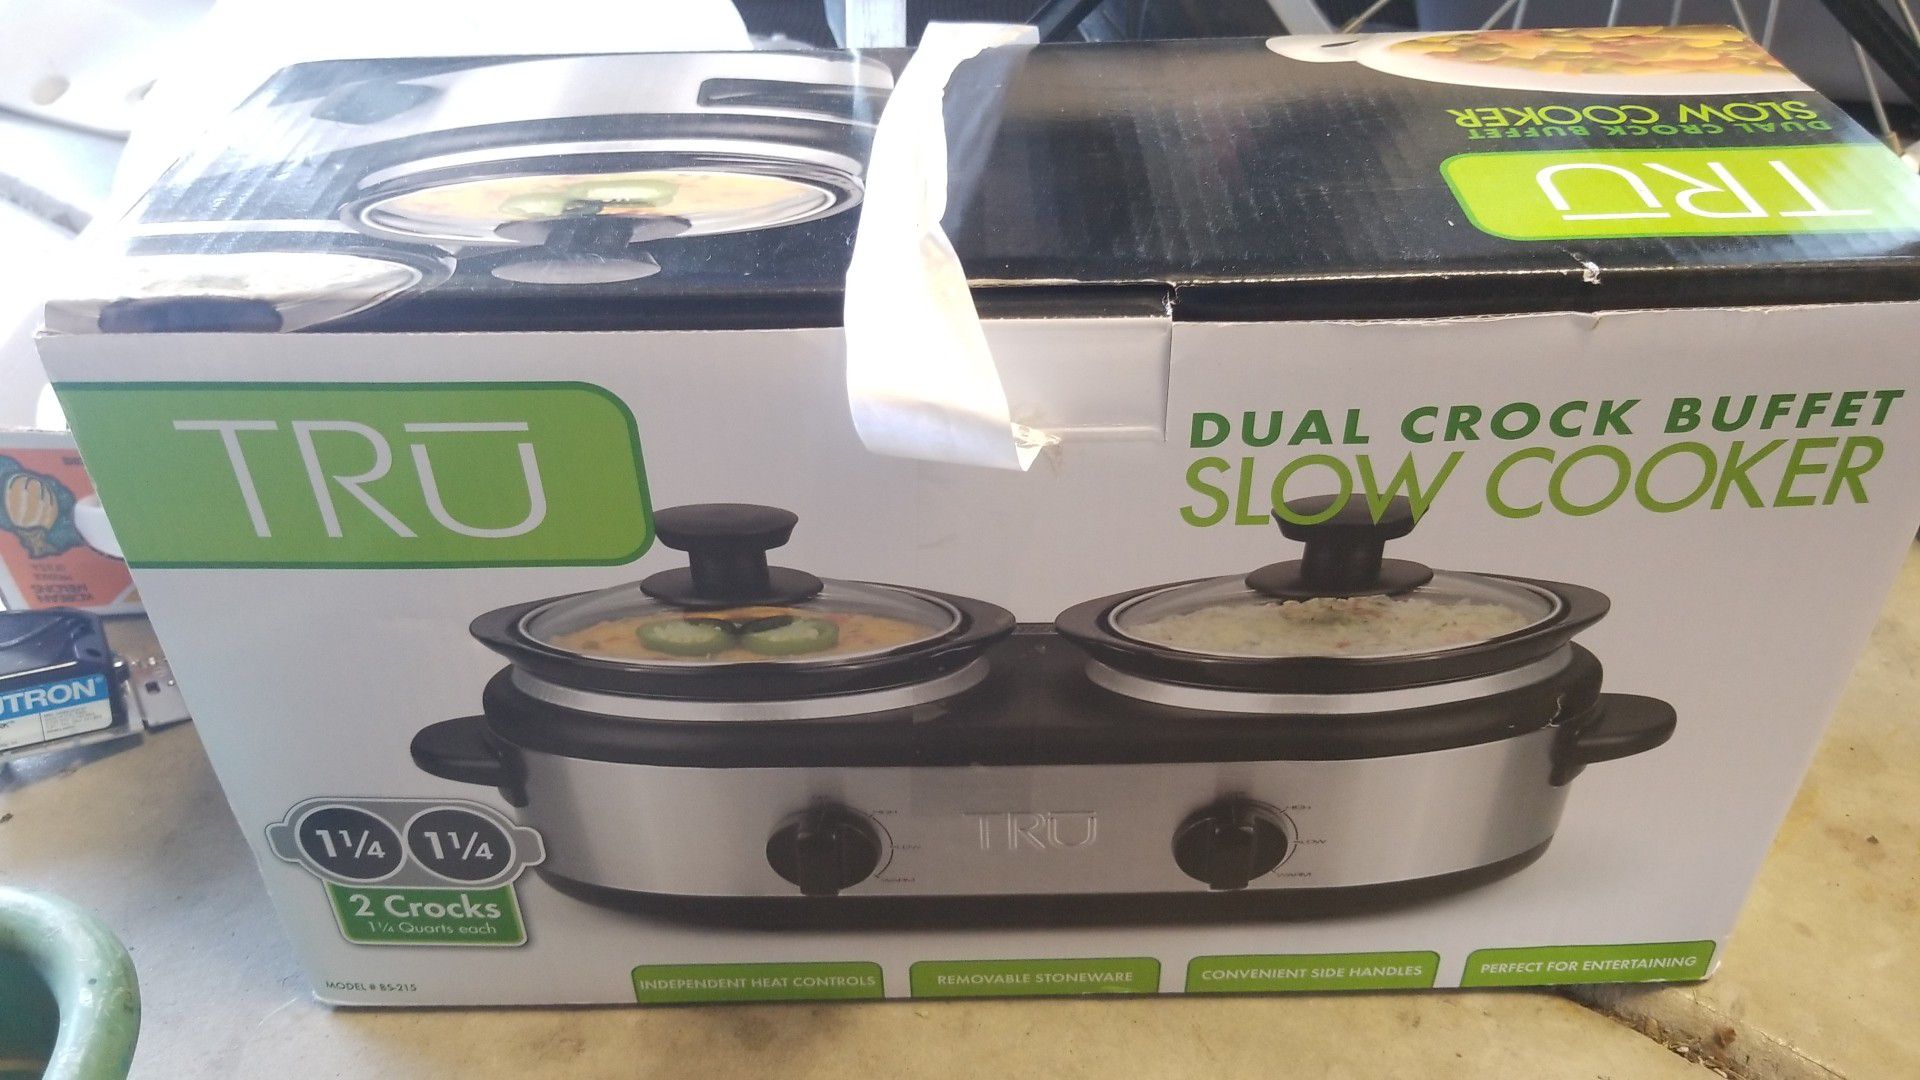 New Dual crock pot slow cooker